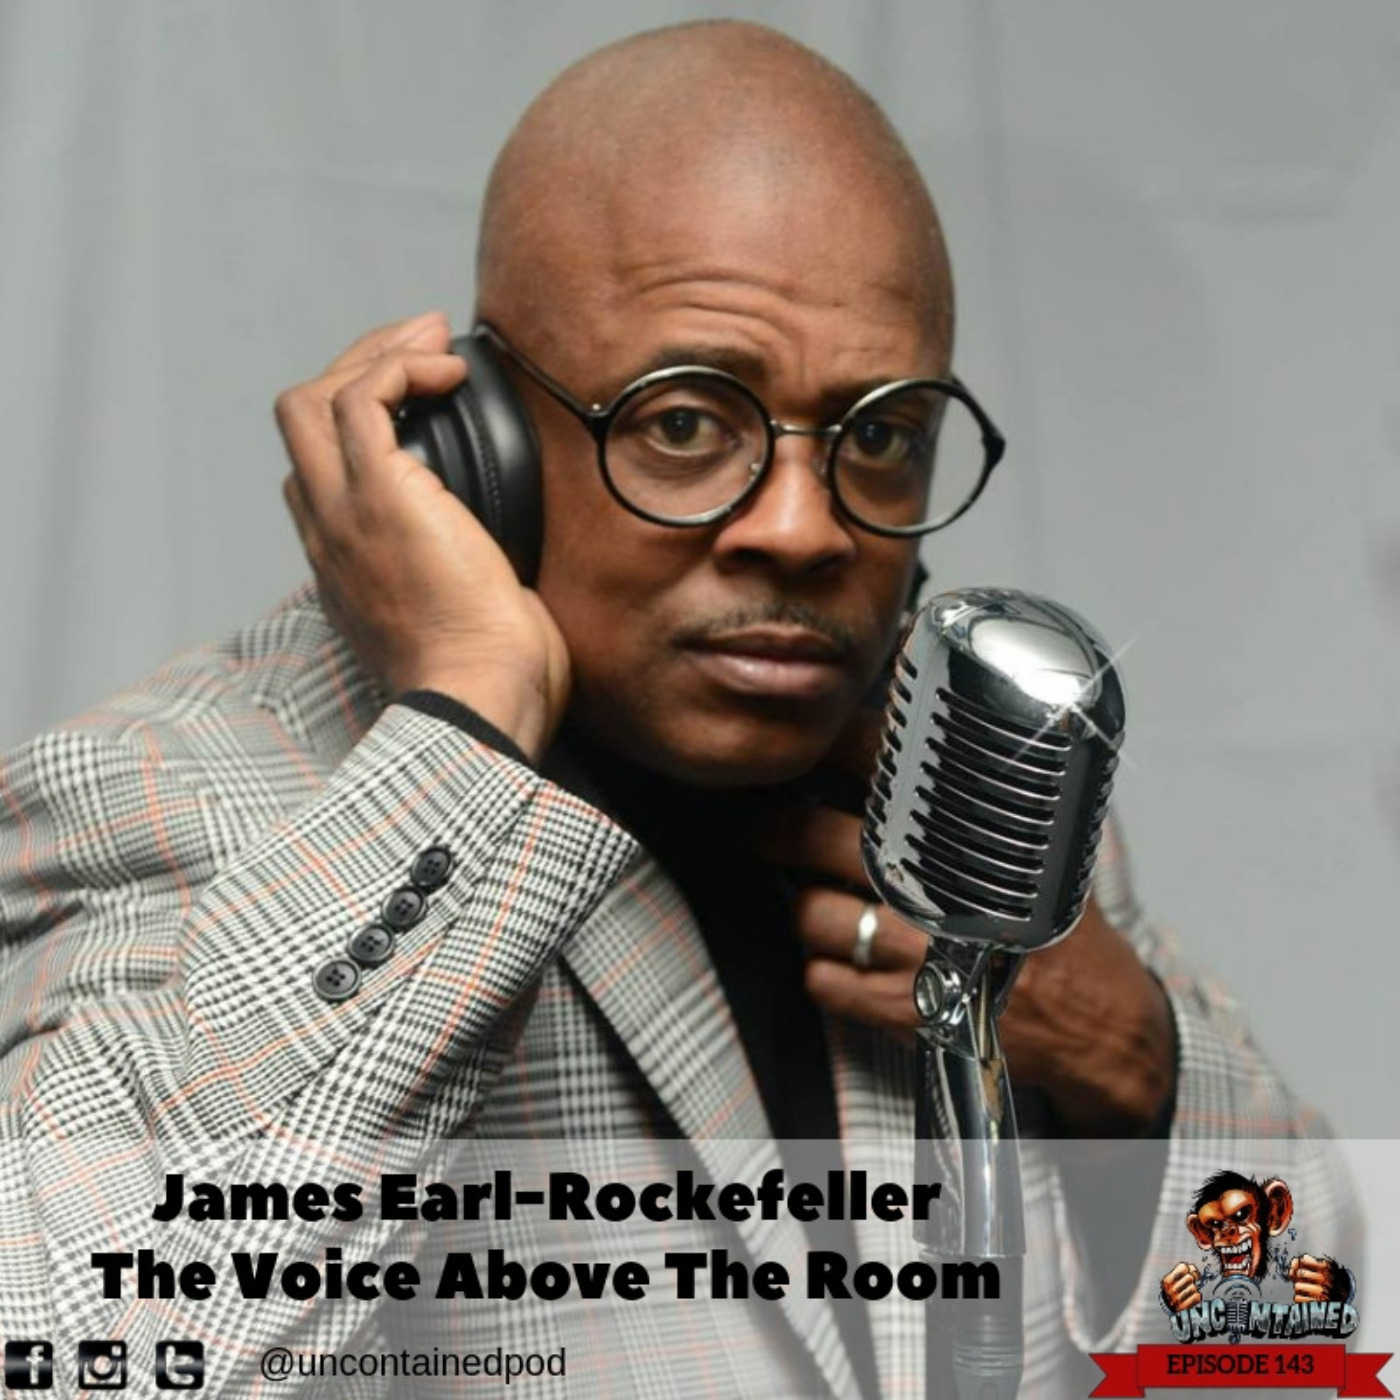 Episode 143: James Earl-Rockefeller - The Voice Above the Room